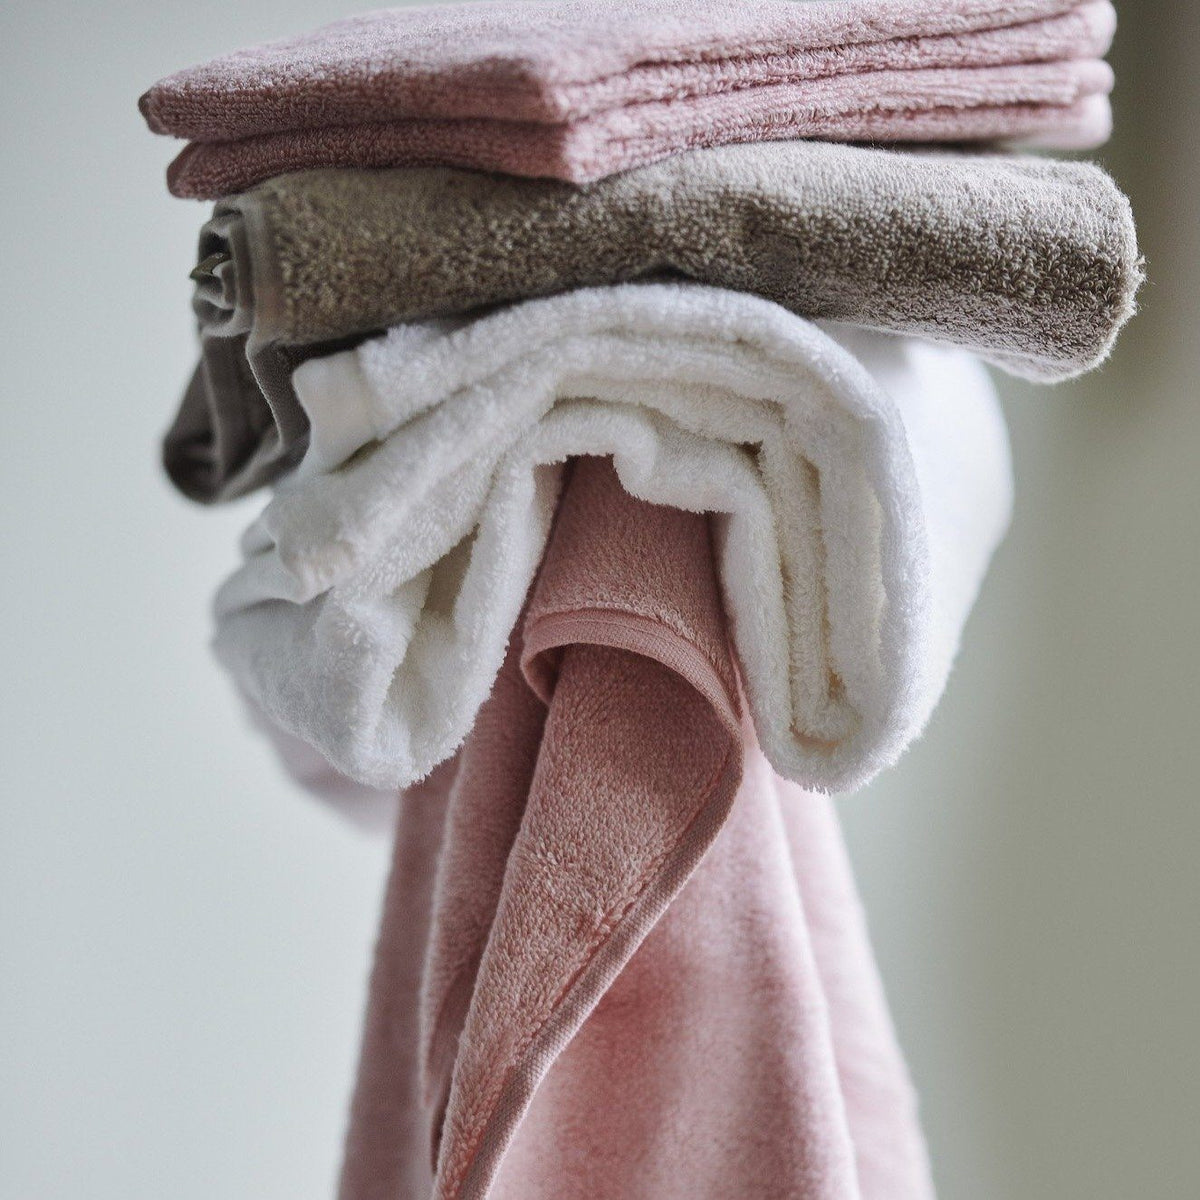 BADSET - Complete set (10stuks) Roze Handdoeken FOUR LEAVES 